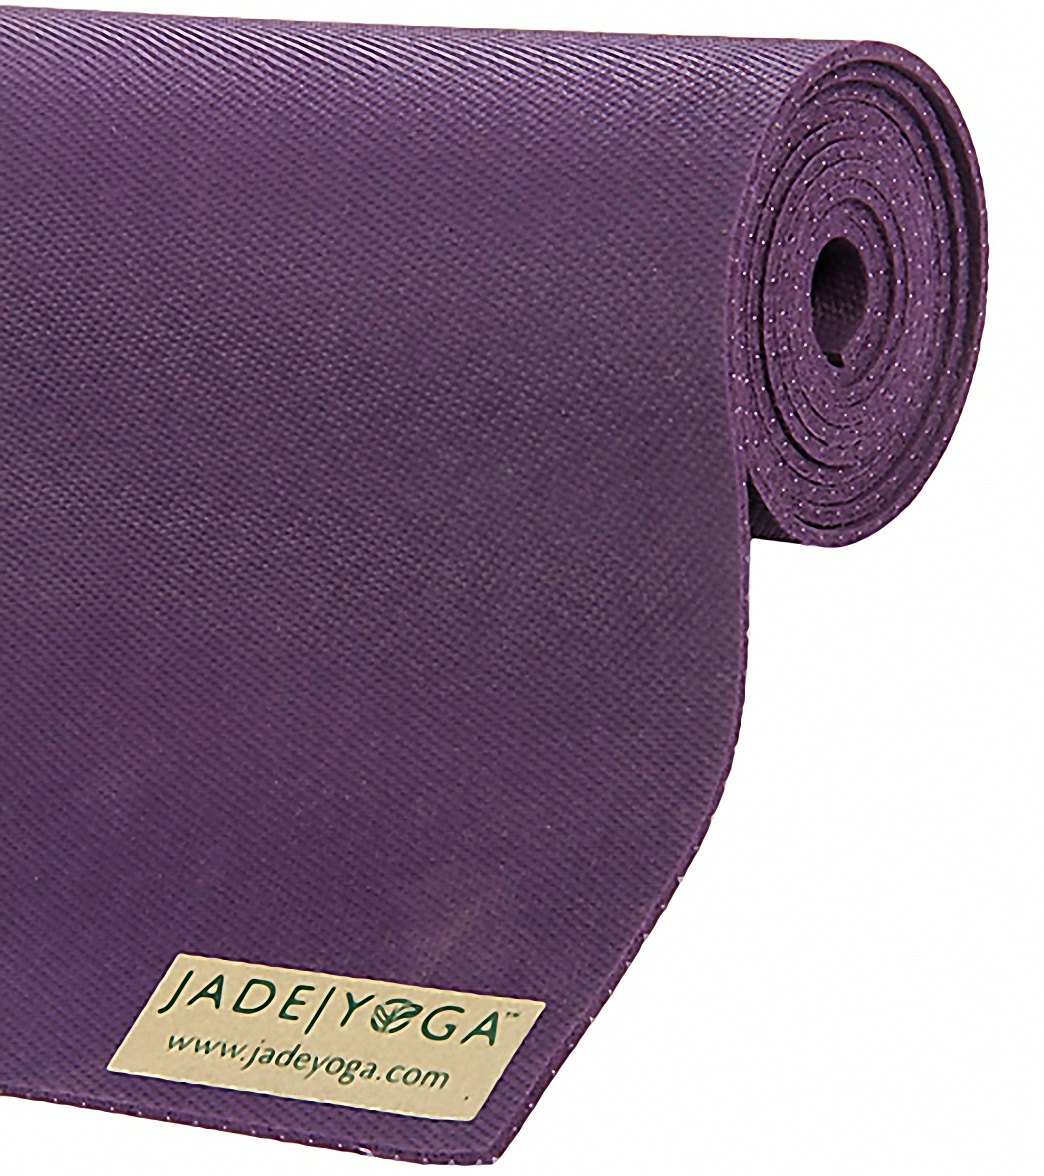 Jade Yoga Harmony Natural Rubber Yoga Mat 68 5mm - Mats, Blocks